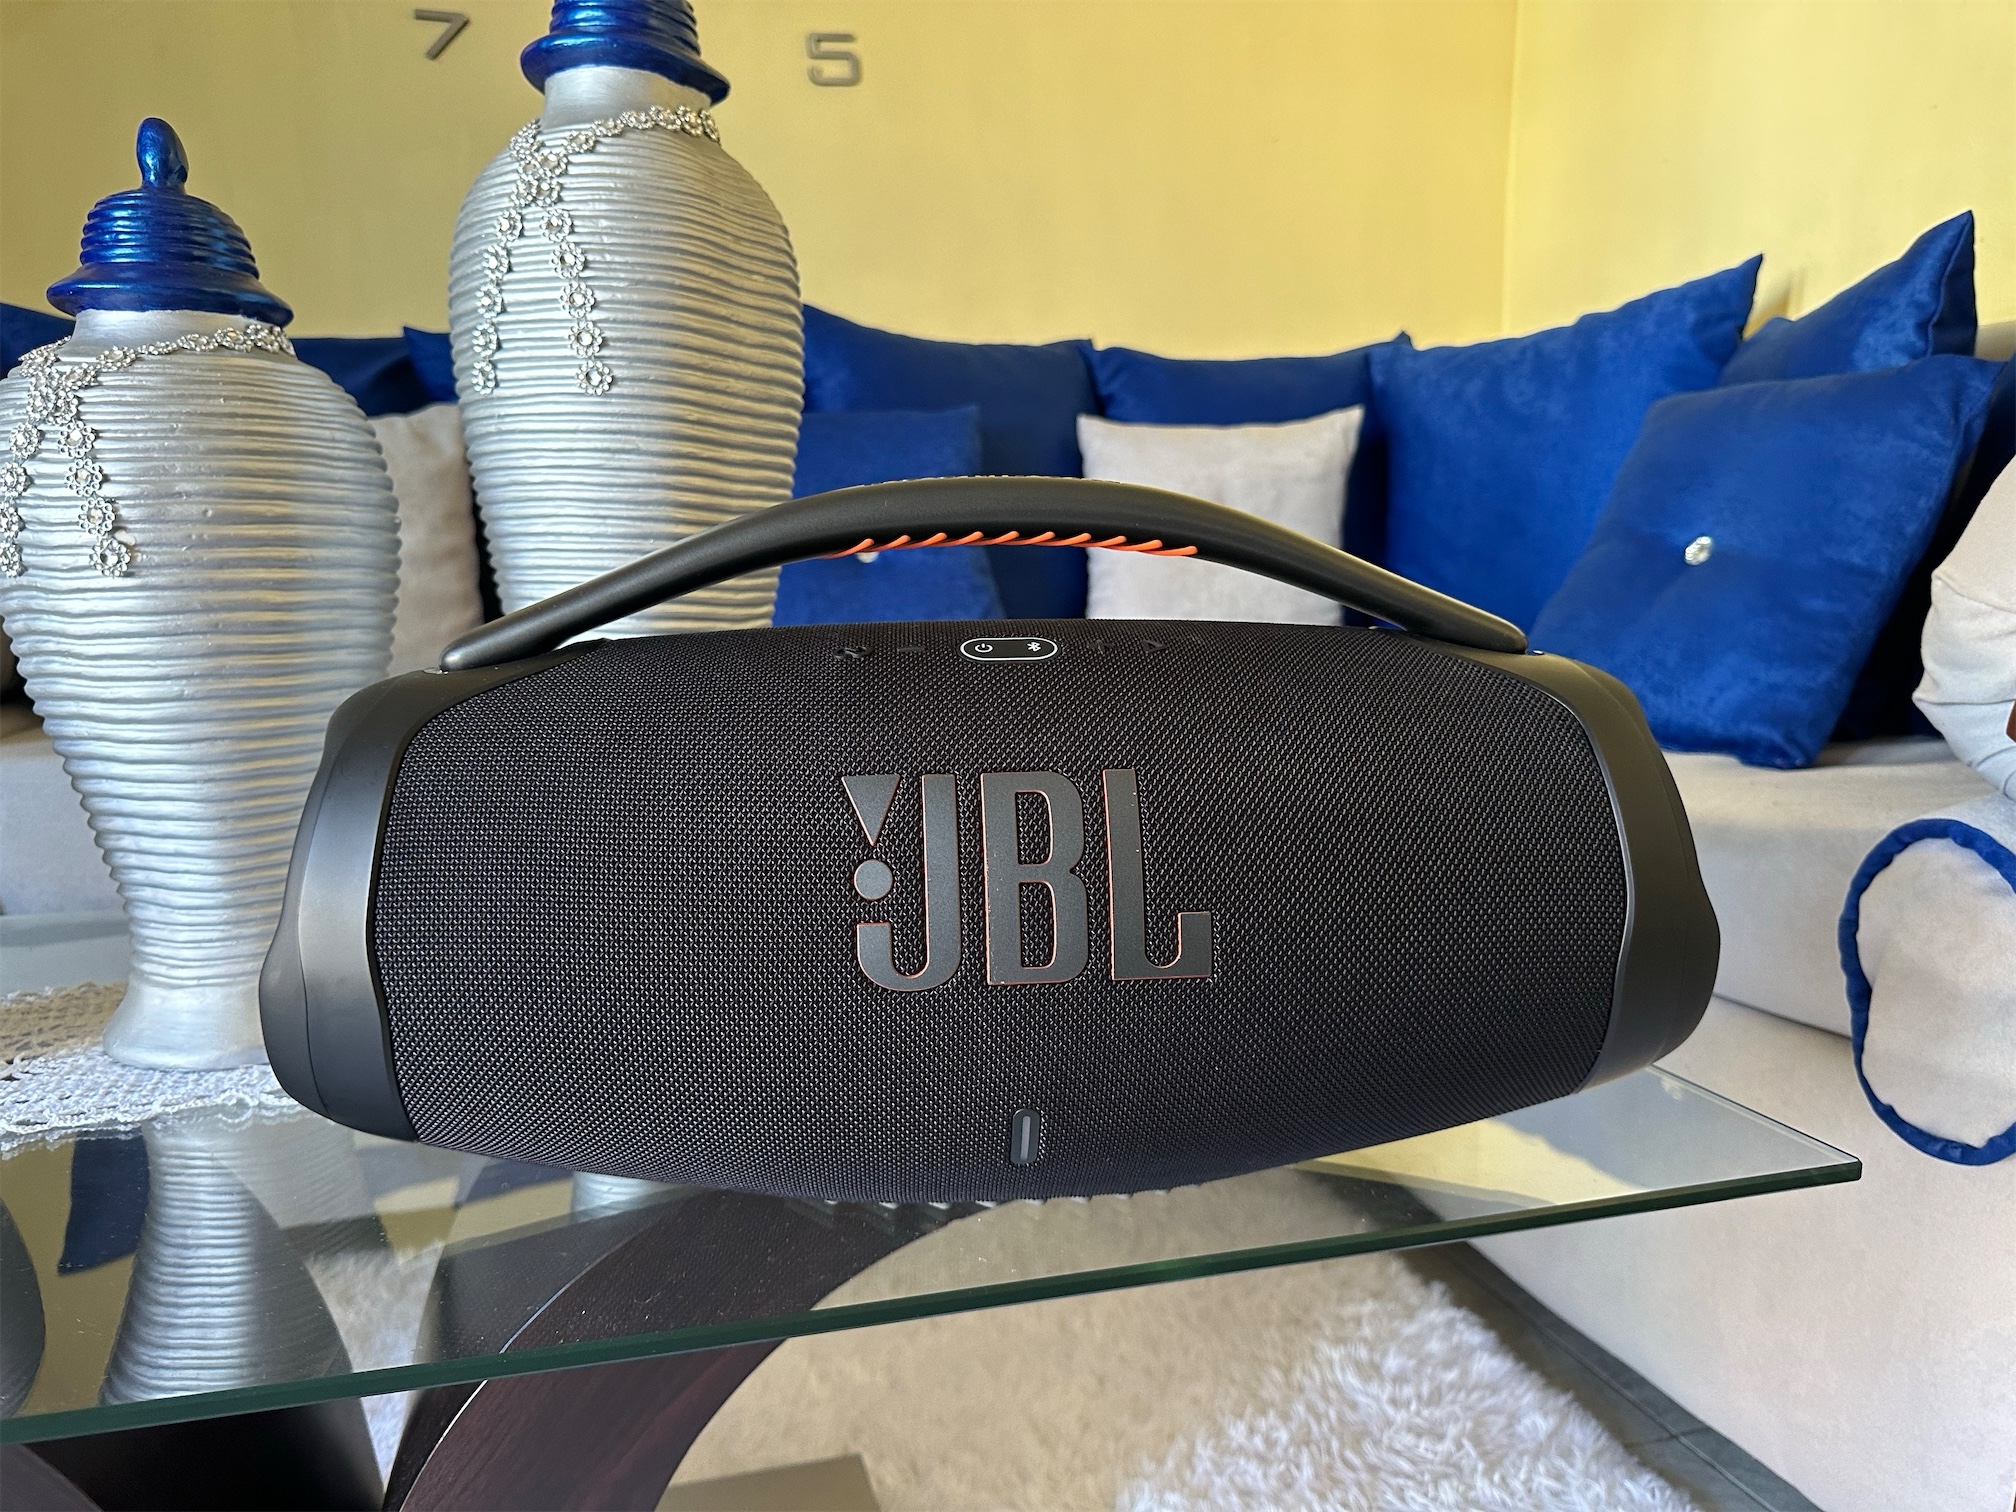 camaras y audio - JBL BOOMBOX 3 

22,000 pesos